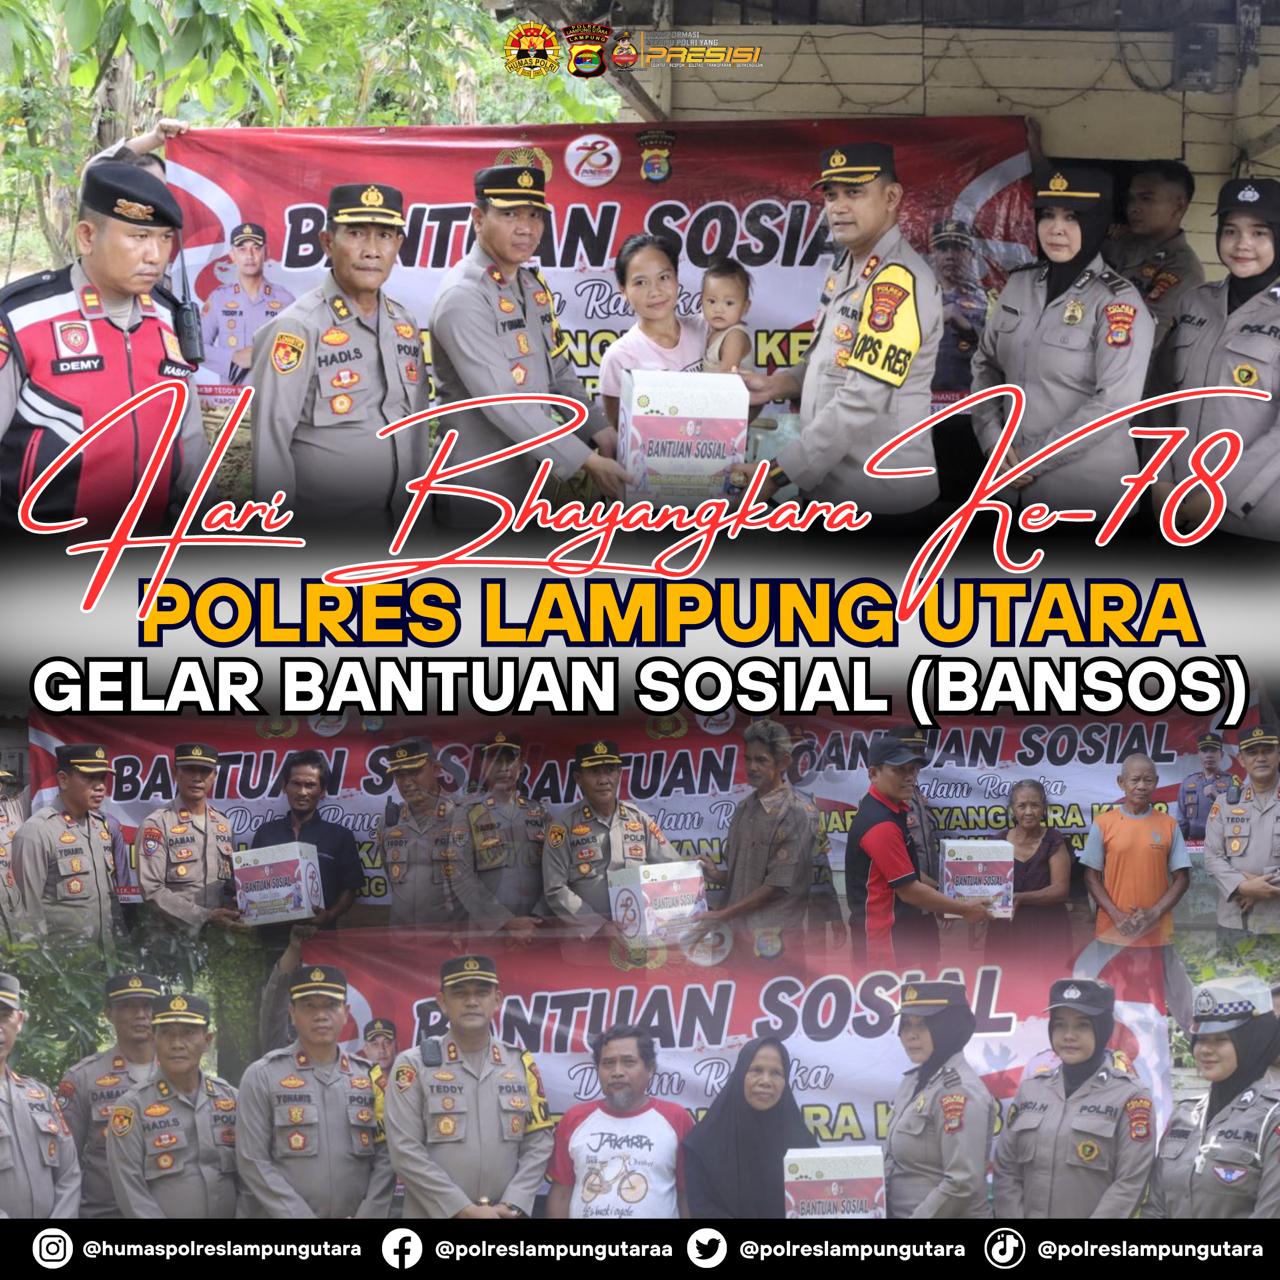 Hari Bhayangkara Ke - 78 ,Polres Lampung Utara Gelar Bantuan Sosial